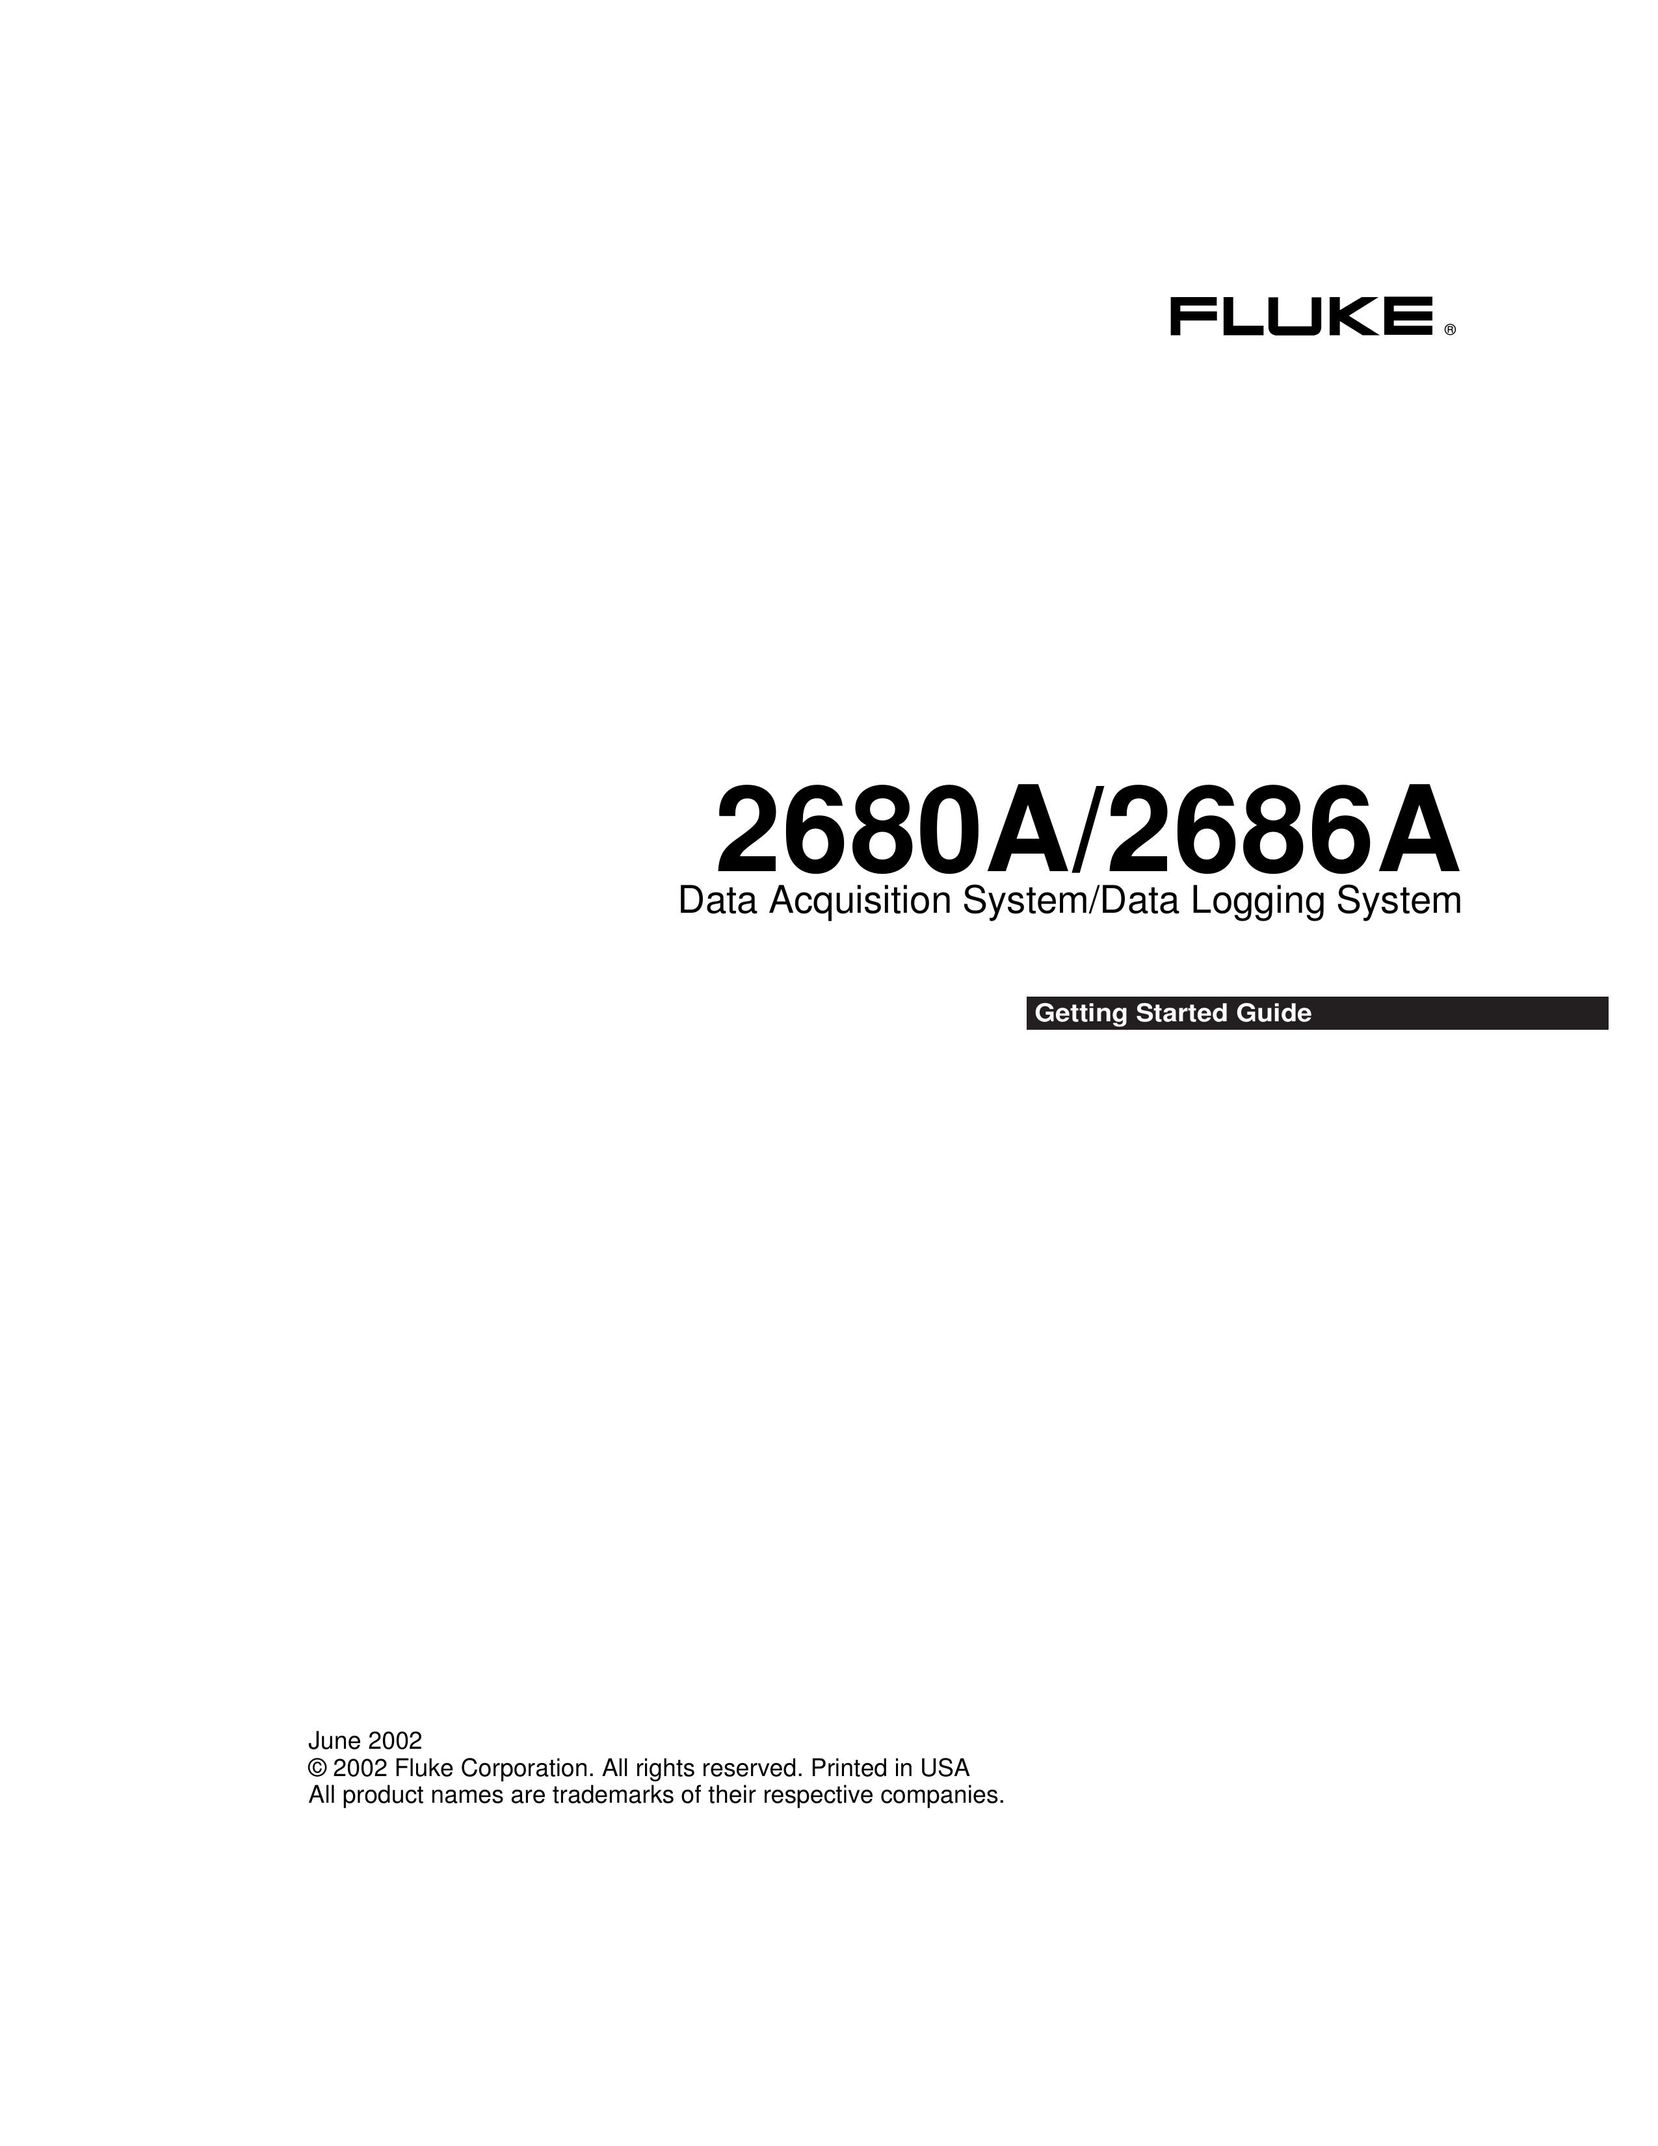 Fluke 2686A Network Card User Manual